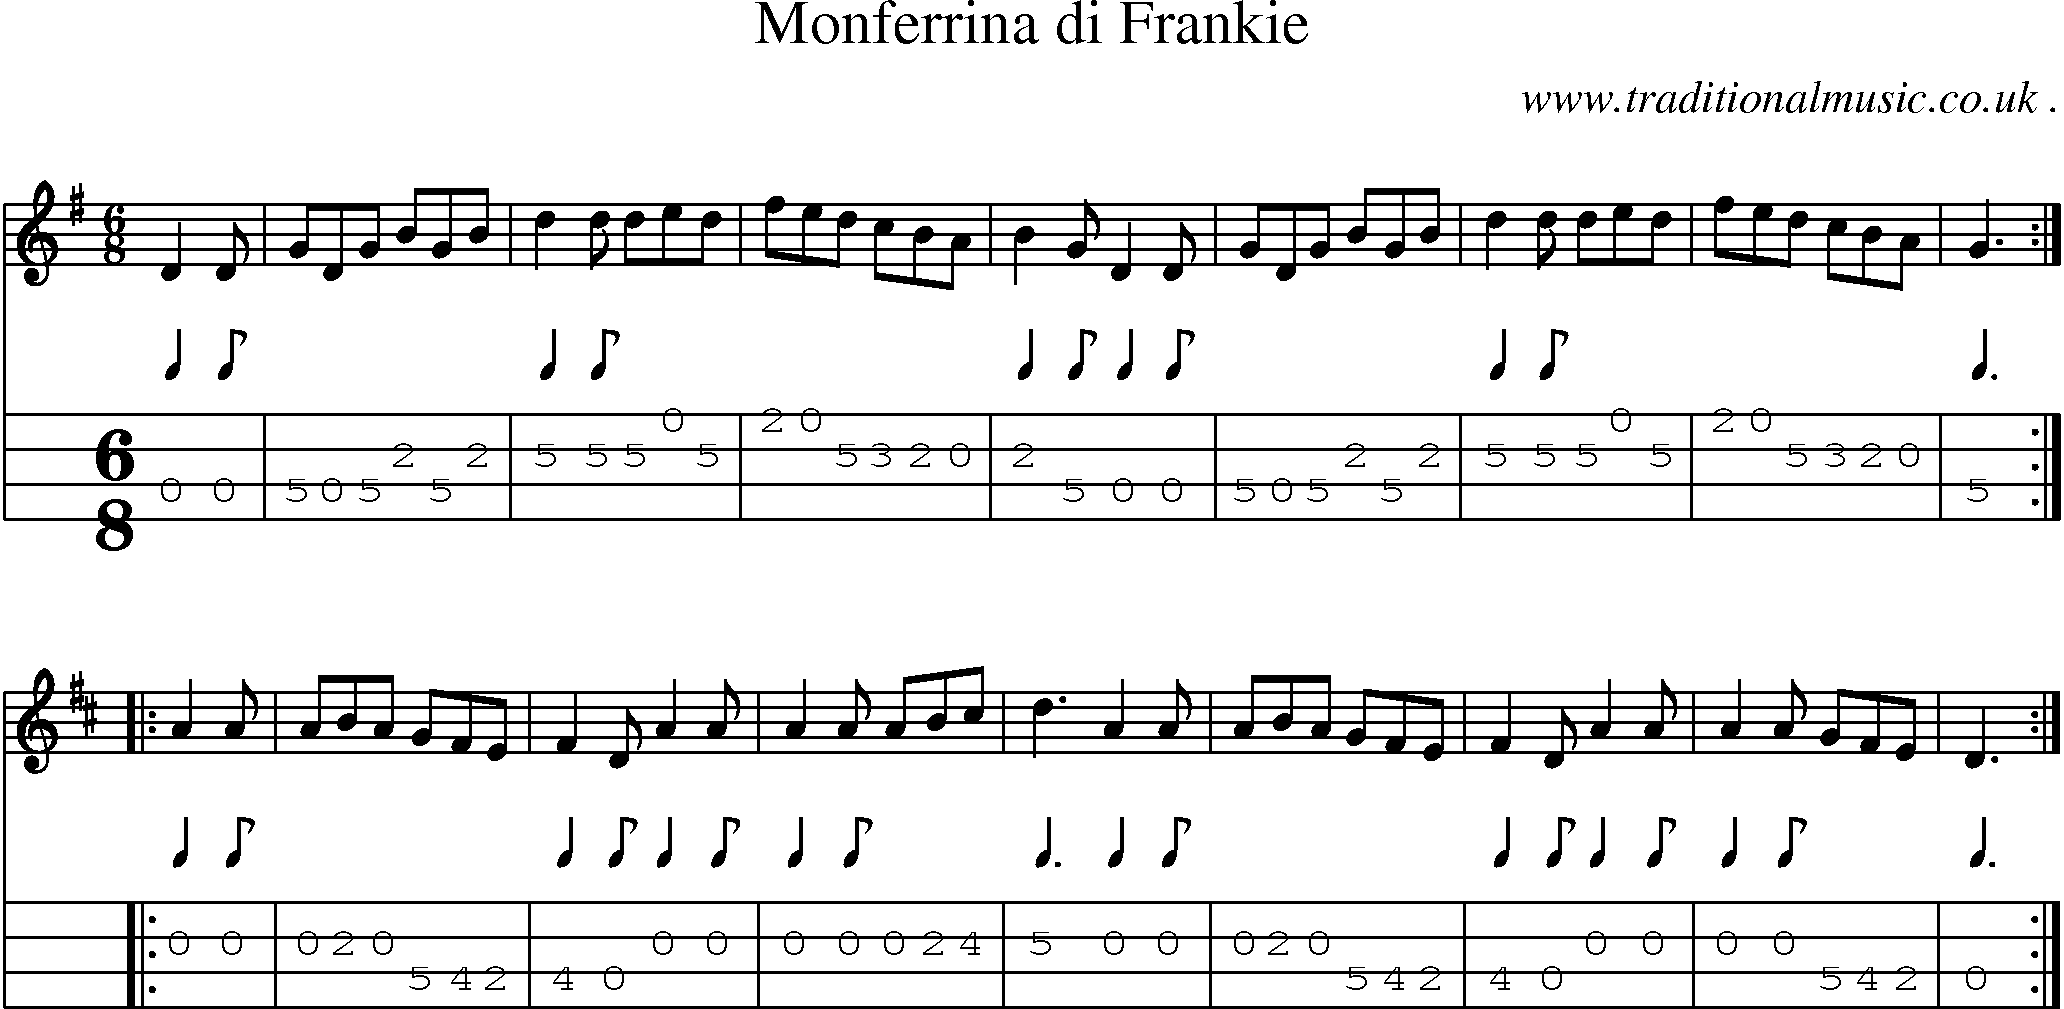 Sheet-Music and Mandolin Tabs for Monferrina Di Frankie